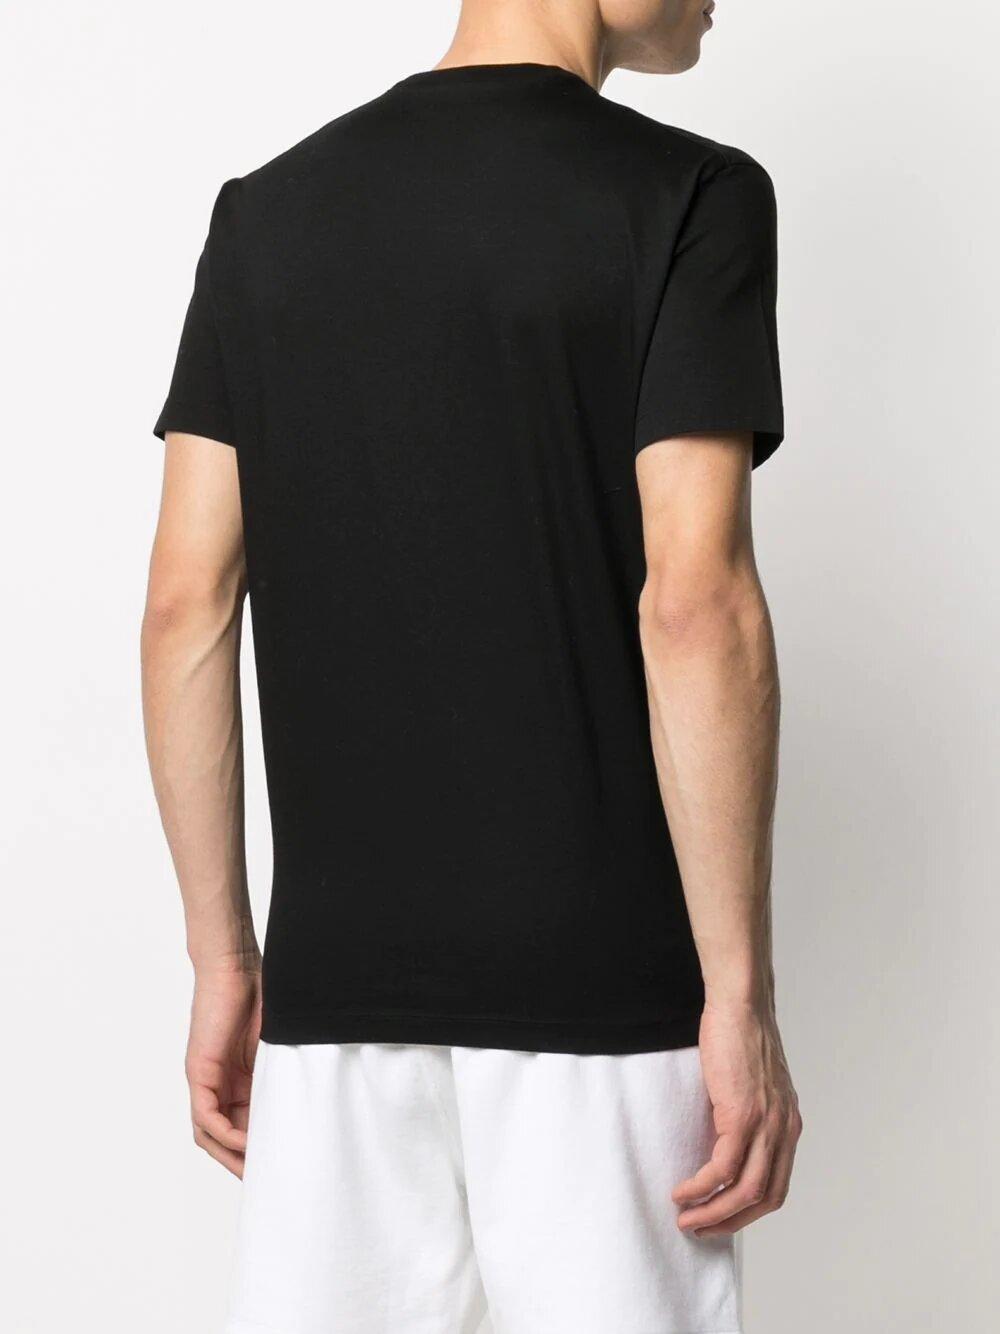 DSquared² Cotton T-shirt in Black for Men Mens T-shirts DSquared² T-shirts Save 45% 